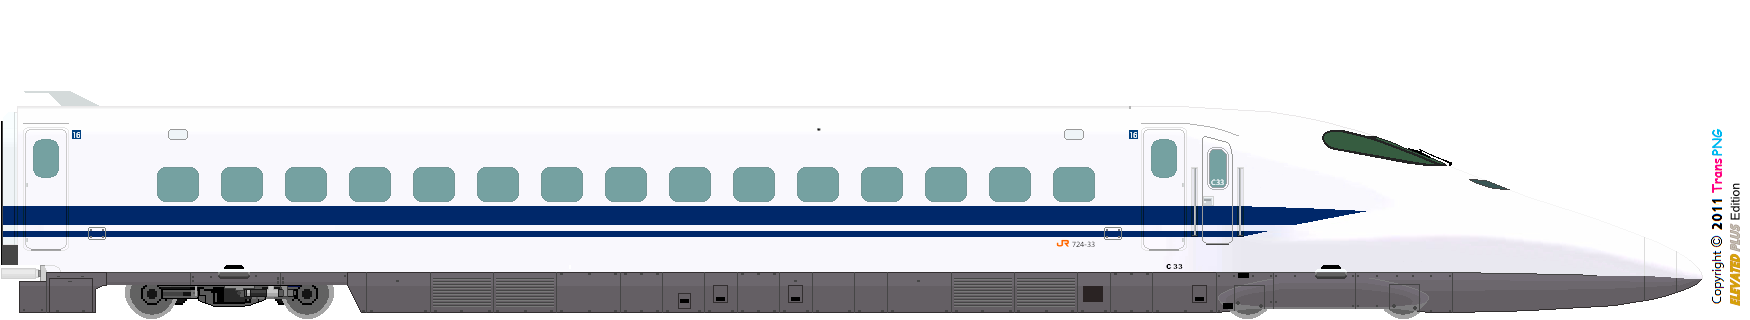 9010 - [9010] Central Japan Railway 52286607302_da10d29018_o